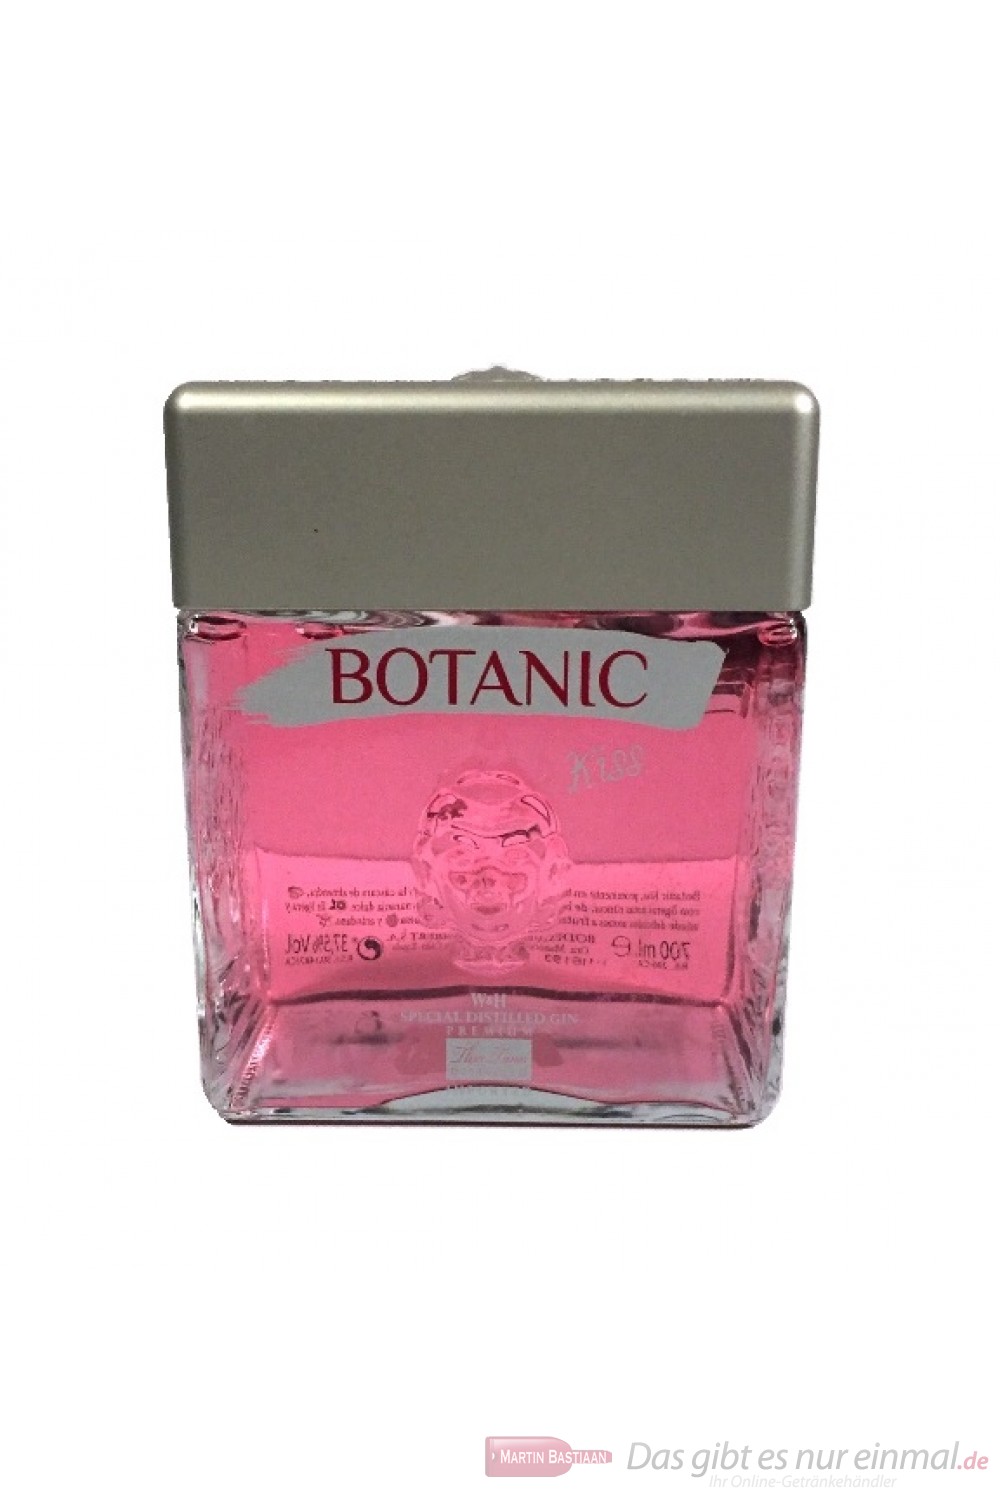 Botanic Kiss Special Distilled Gin